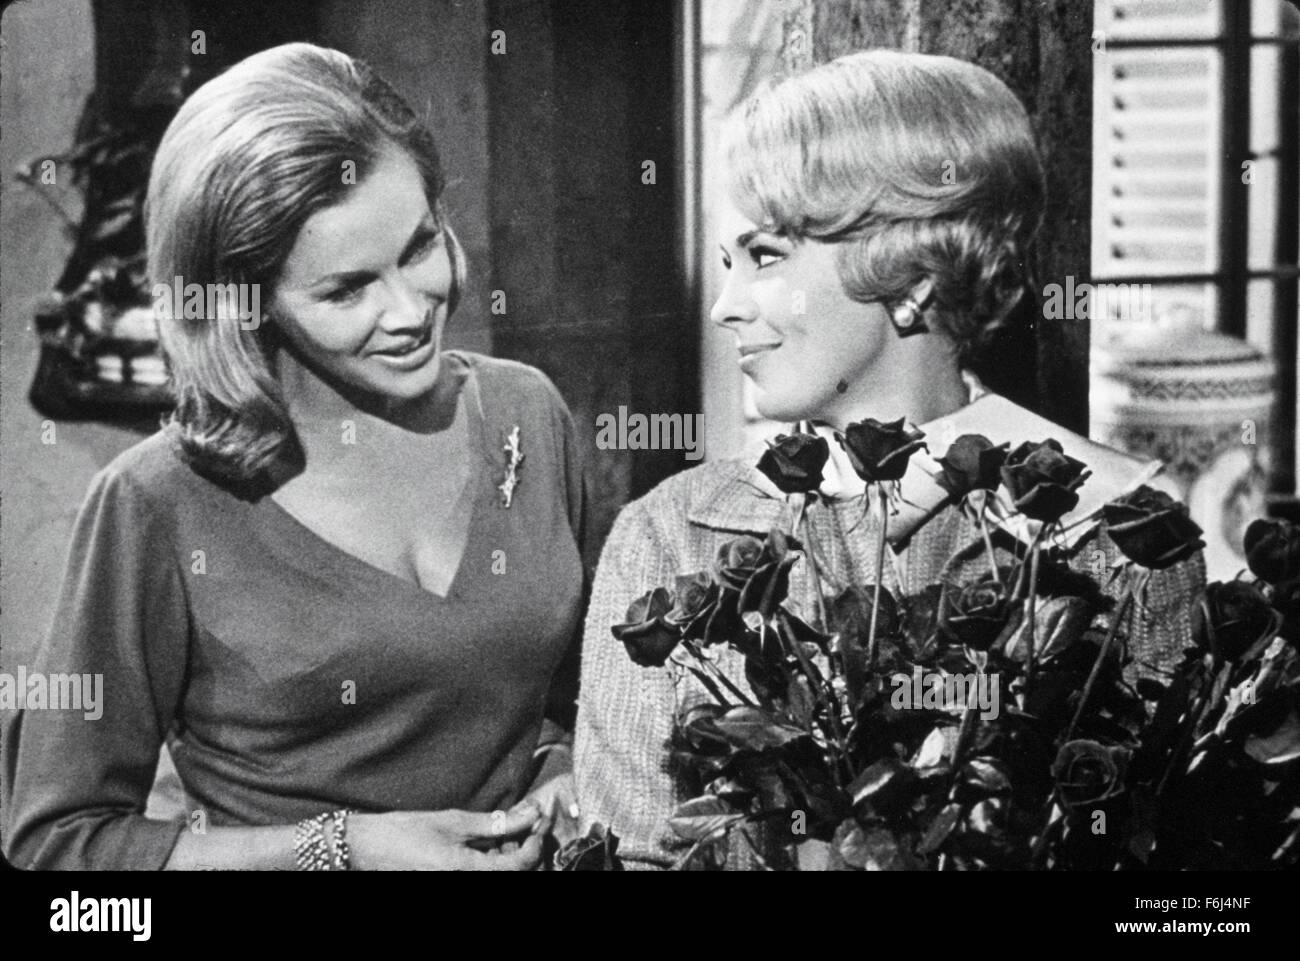 1966, Filmtitel: MOMENT, MOMENT, Regie: MERVYN LeROY, abgebildet: HONOR BLACKMAN, MERVYN LeROY. (Bild Kredit: SNAP) Stockfoto